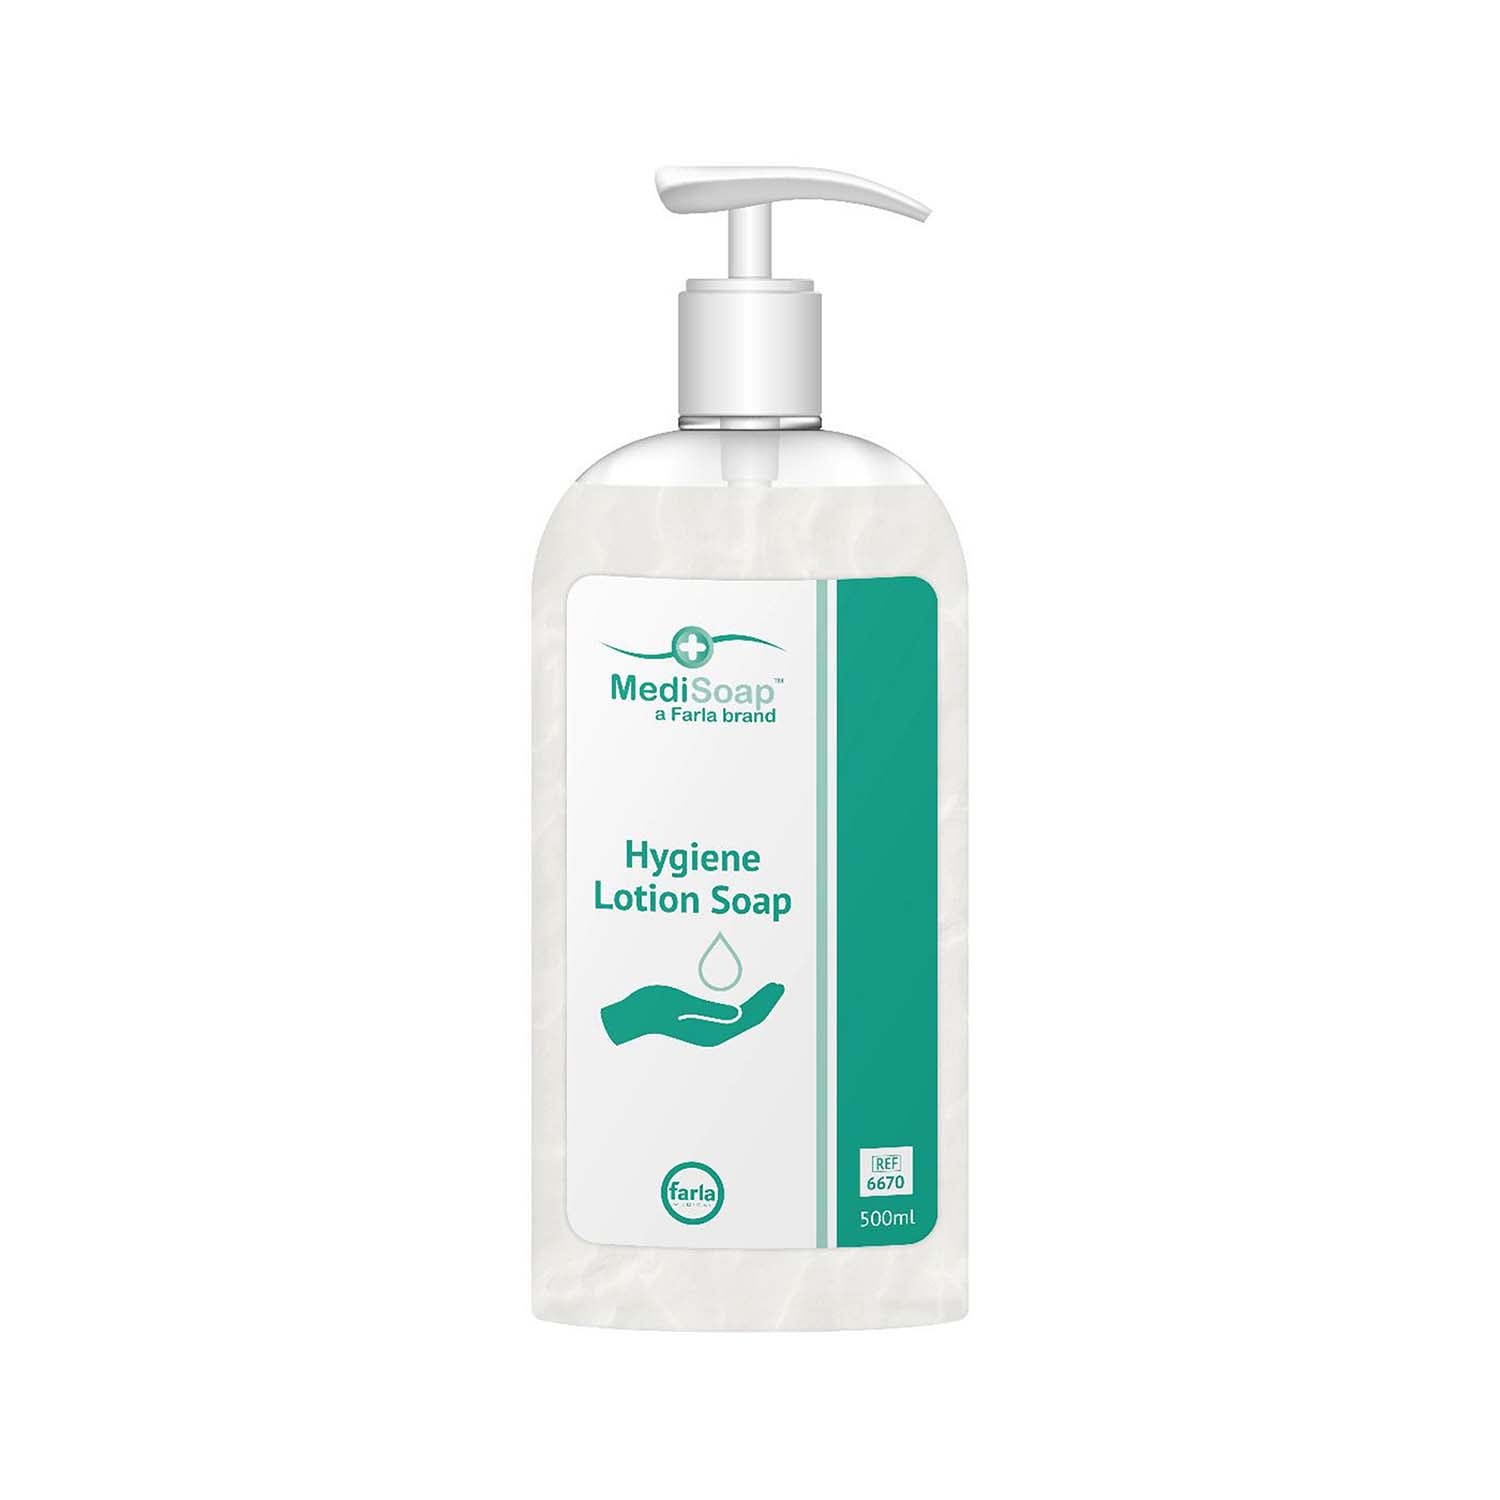 MediSoap Hygiene Lotion Soap | 500ml | Pump